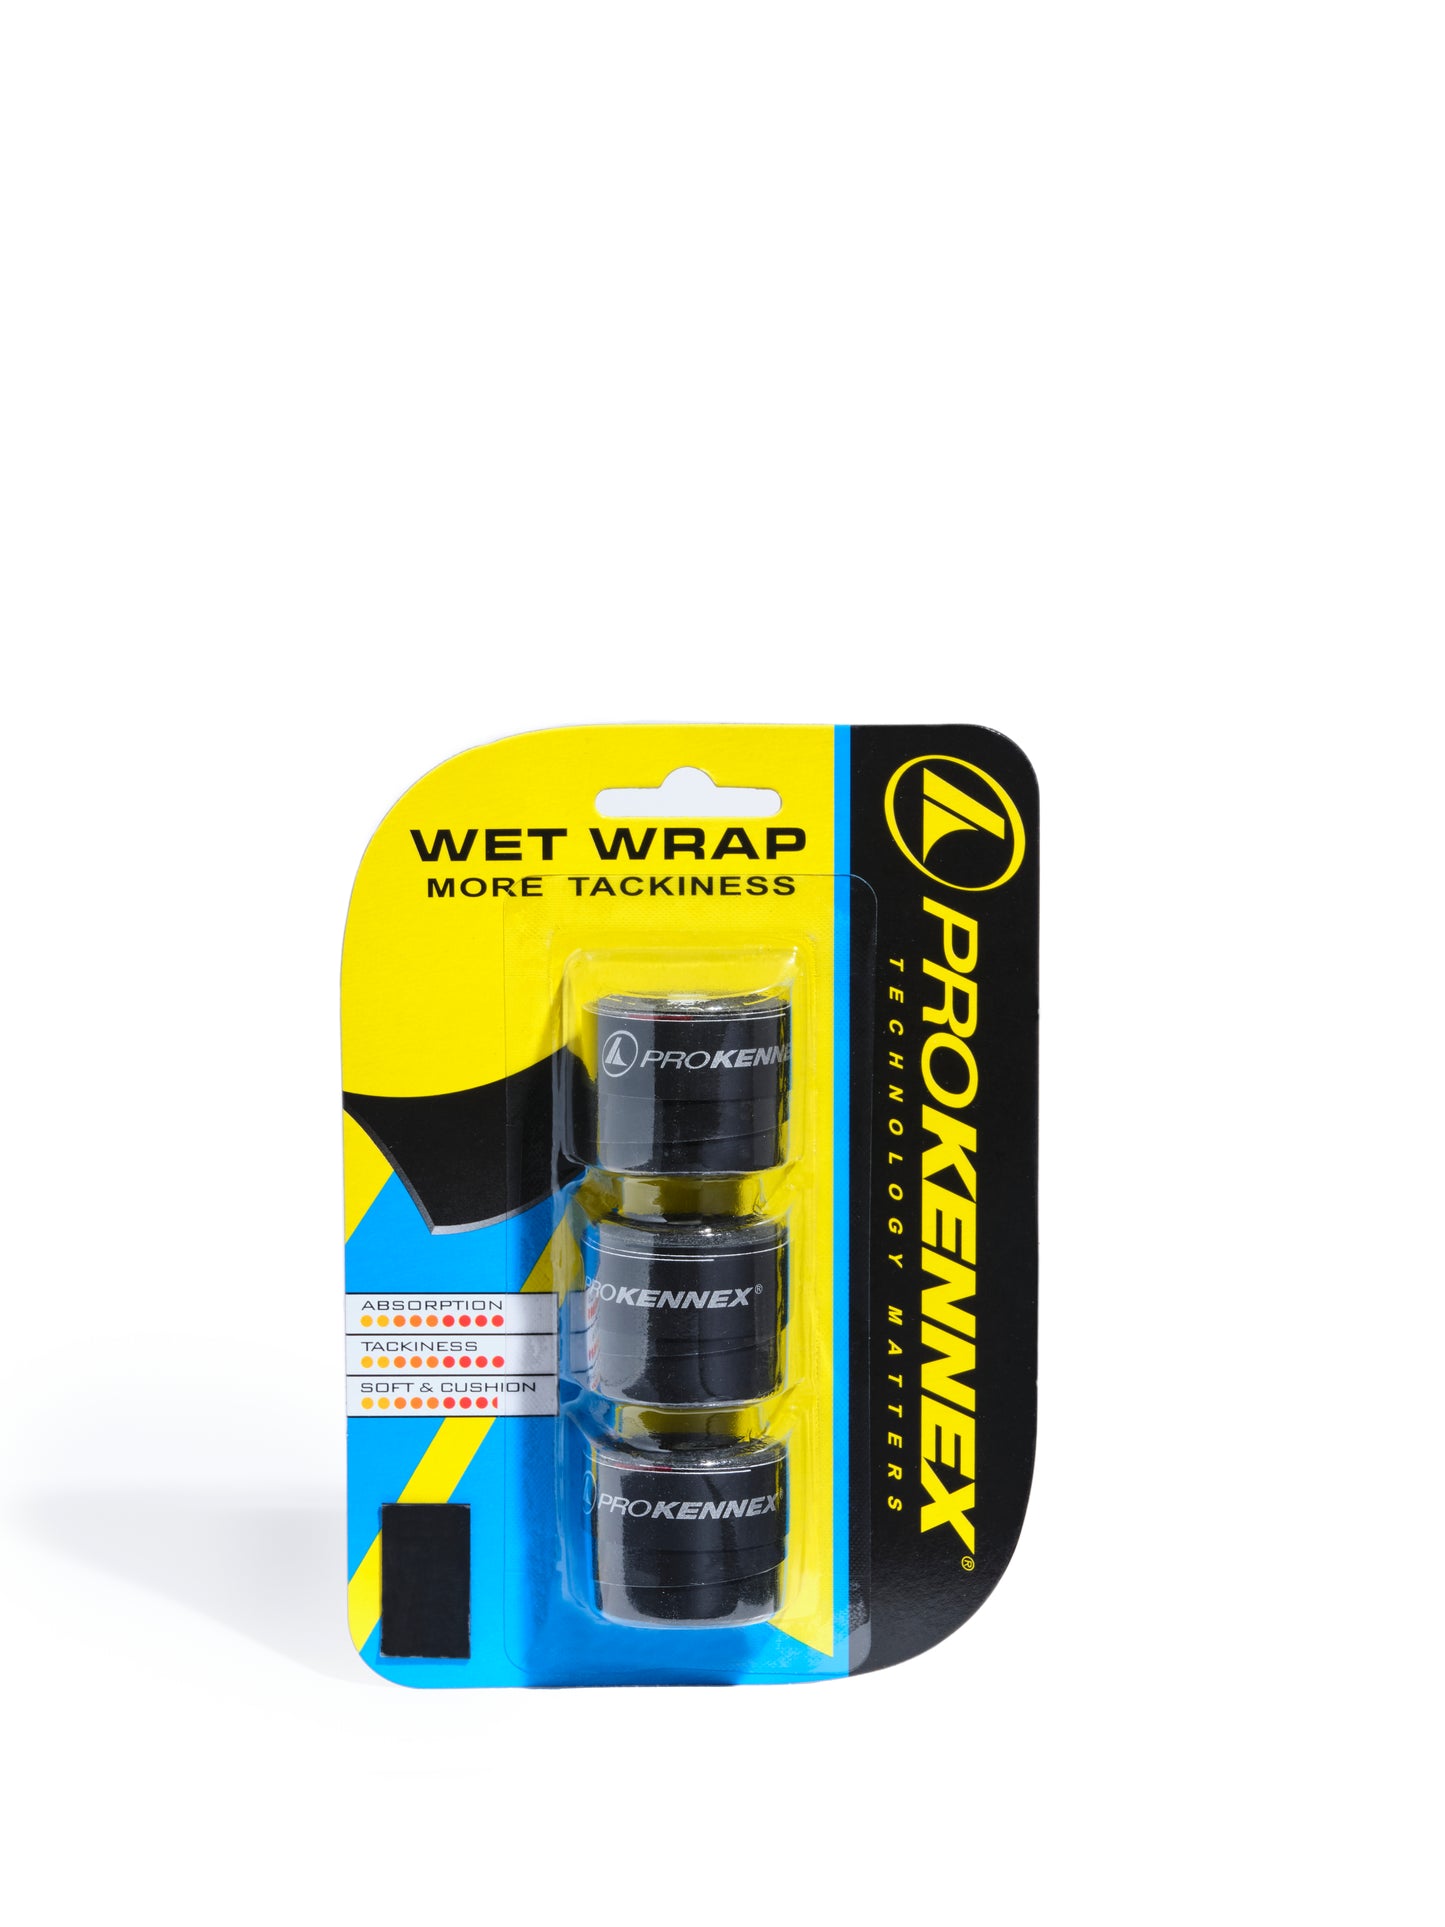 ProKennex Wet Wrap